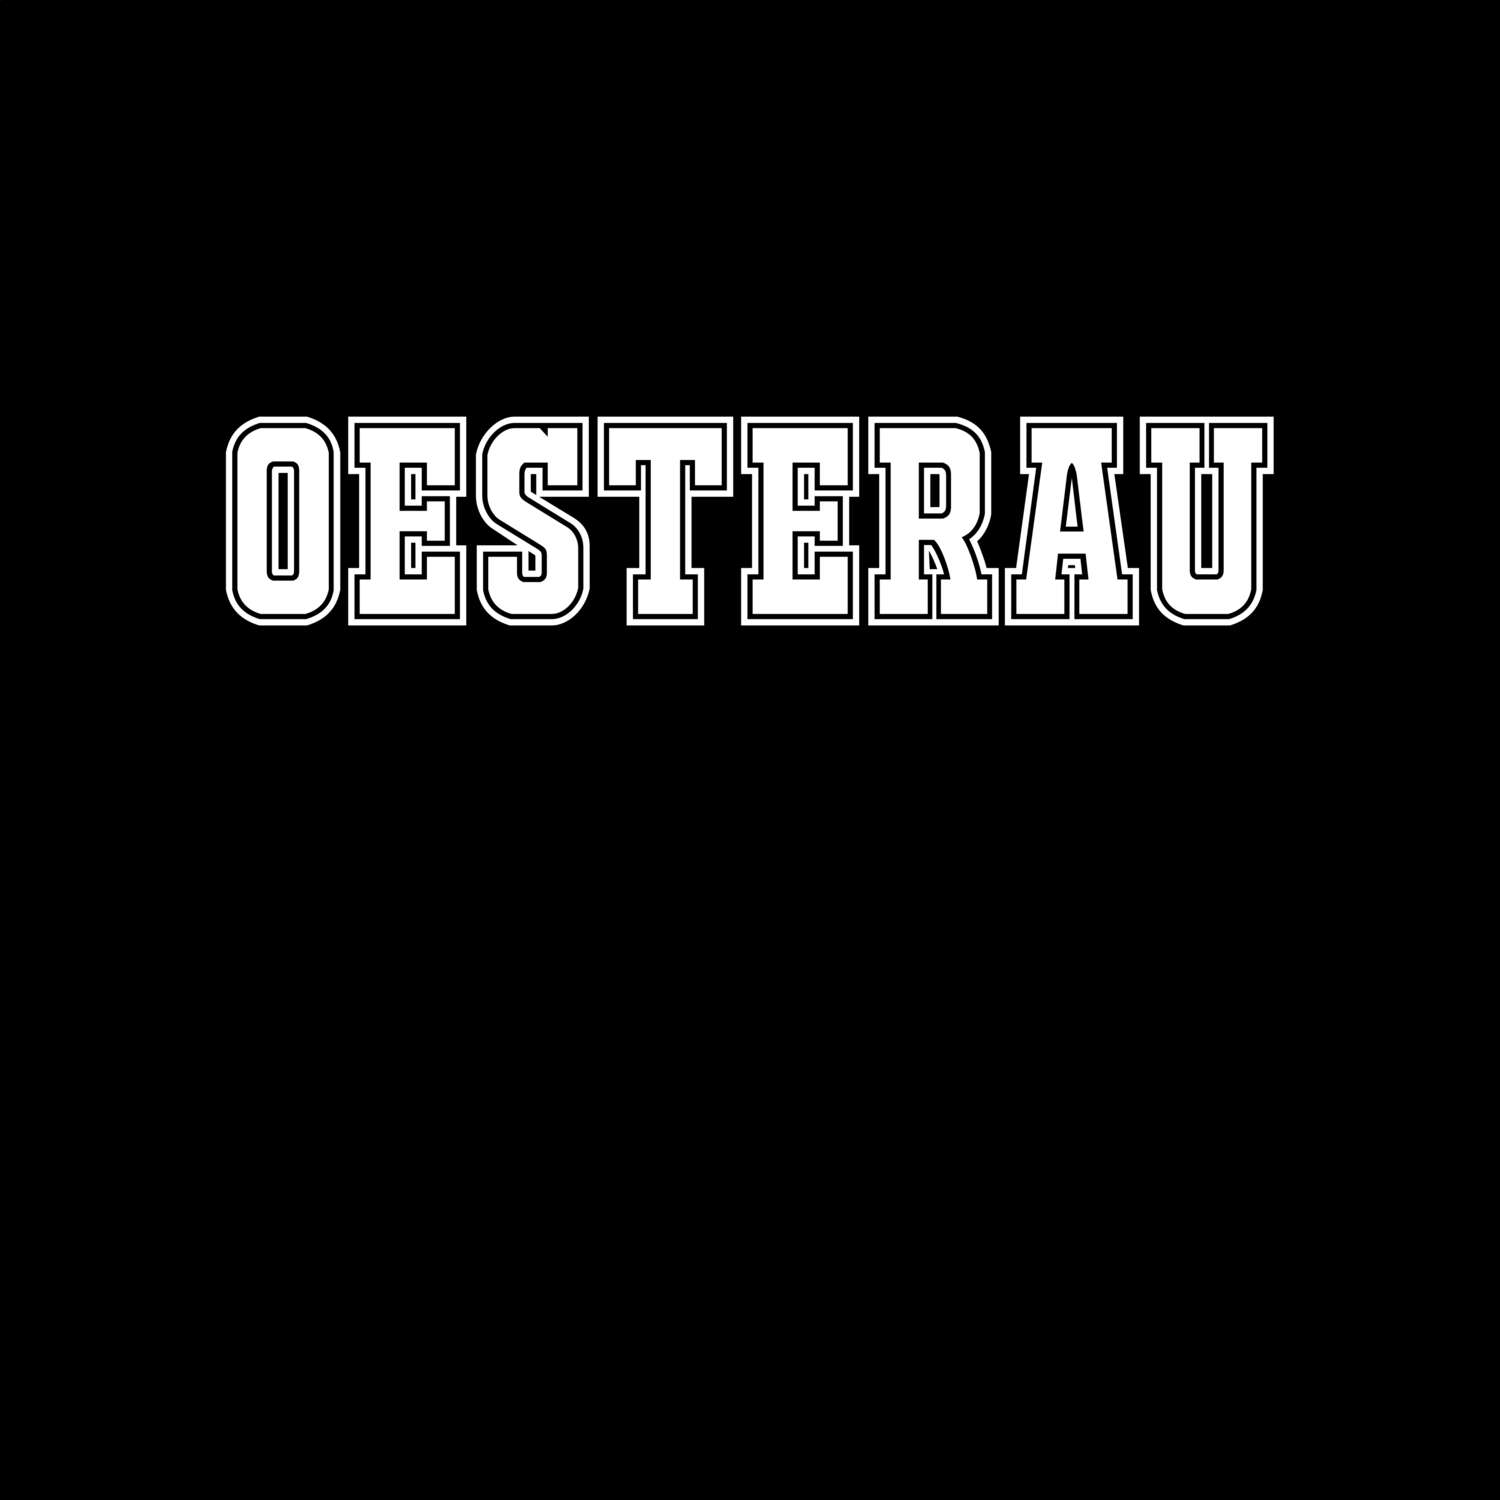 Oesterau T-Shirt »Classic«